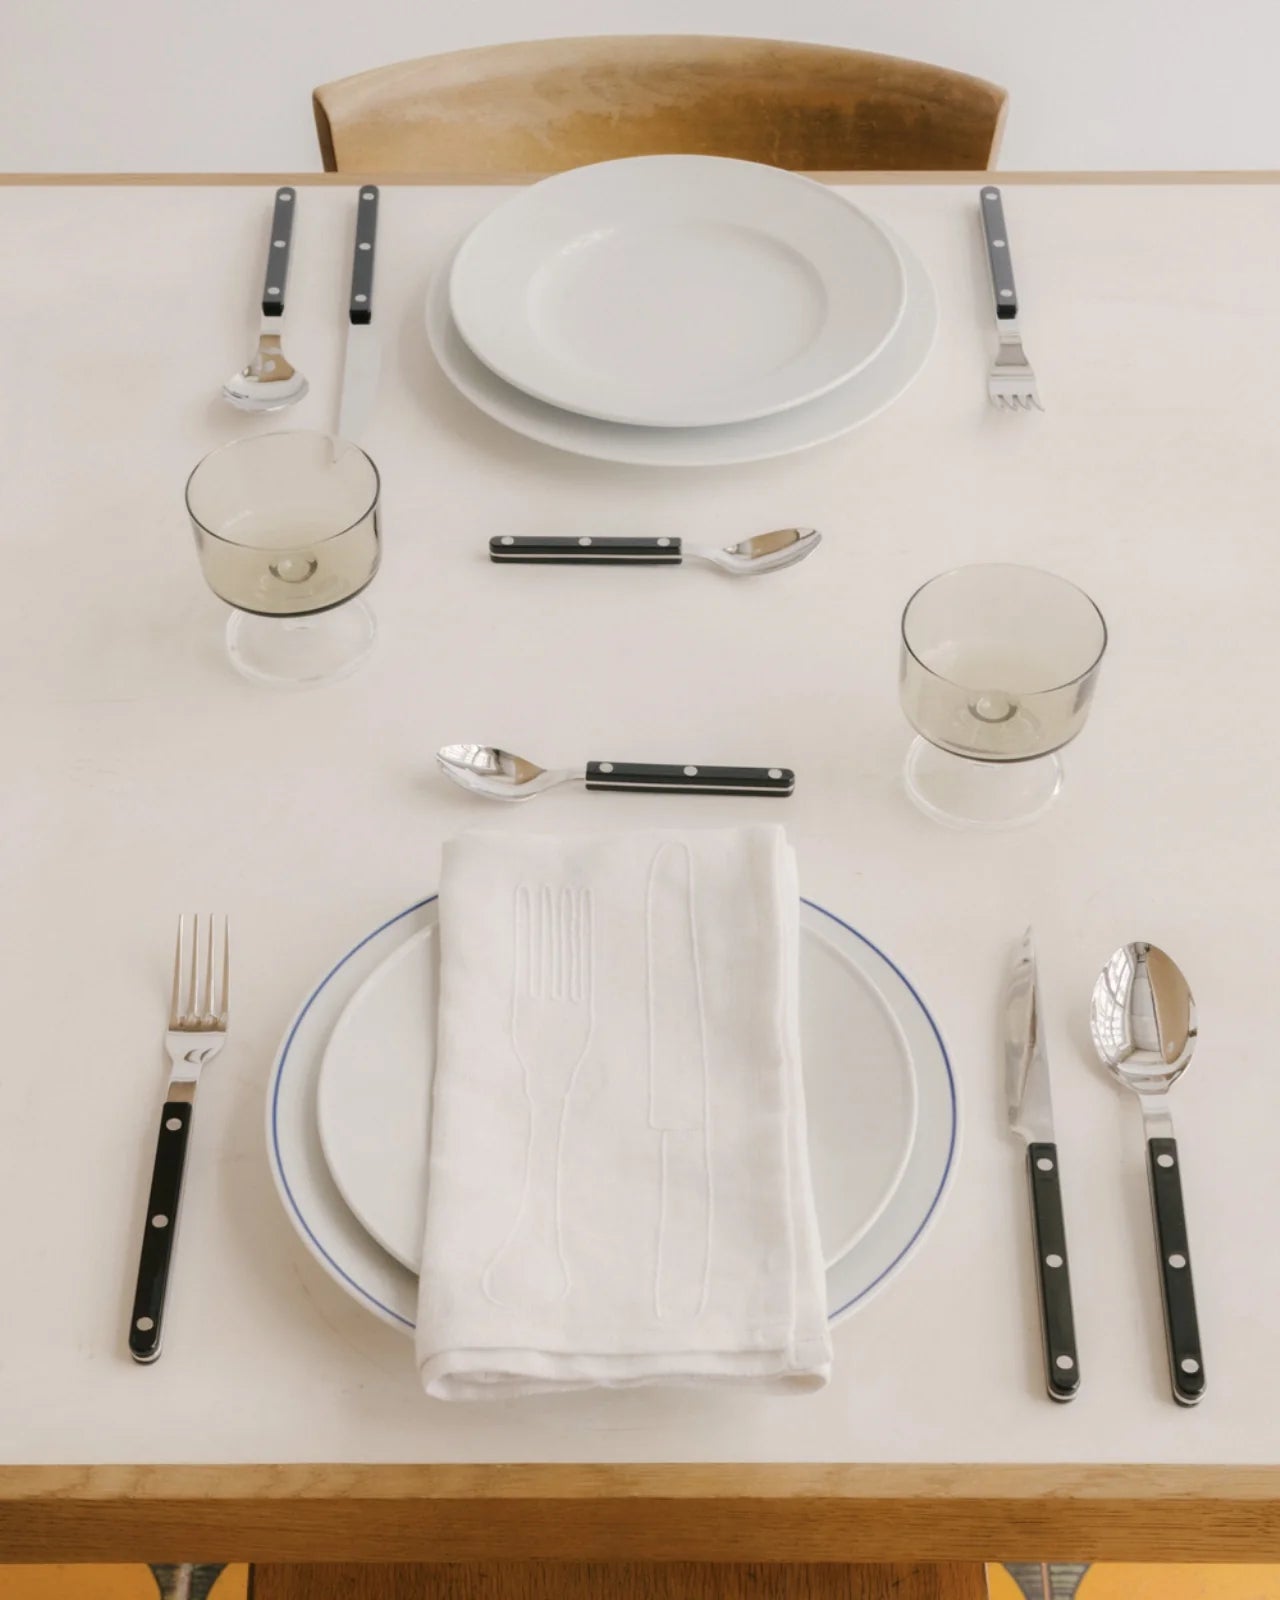 Sabre Bistrot 5 Piece Cutlery Set in Black